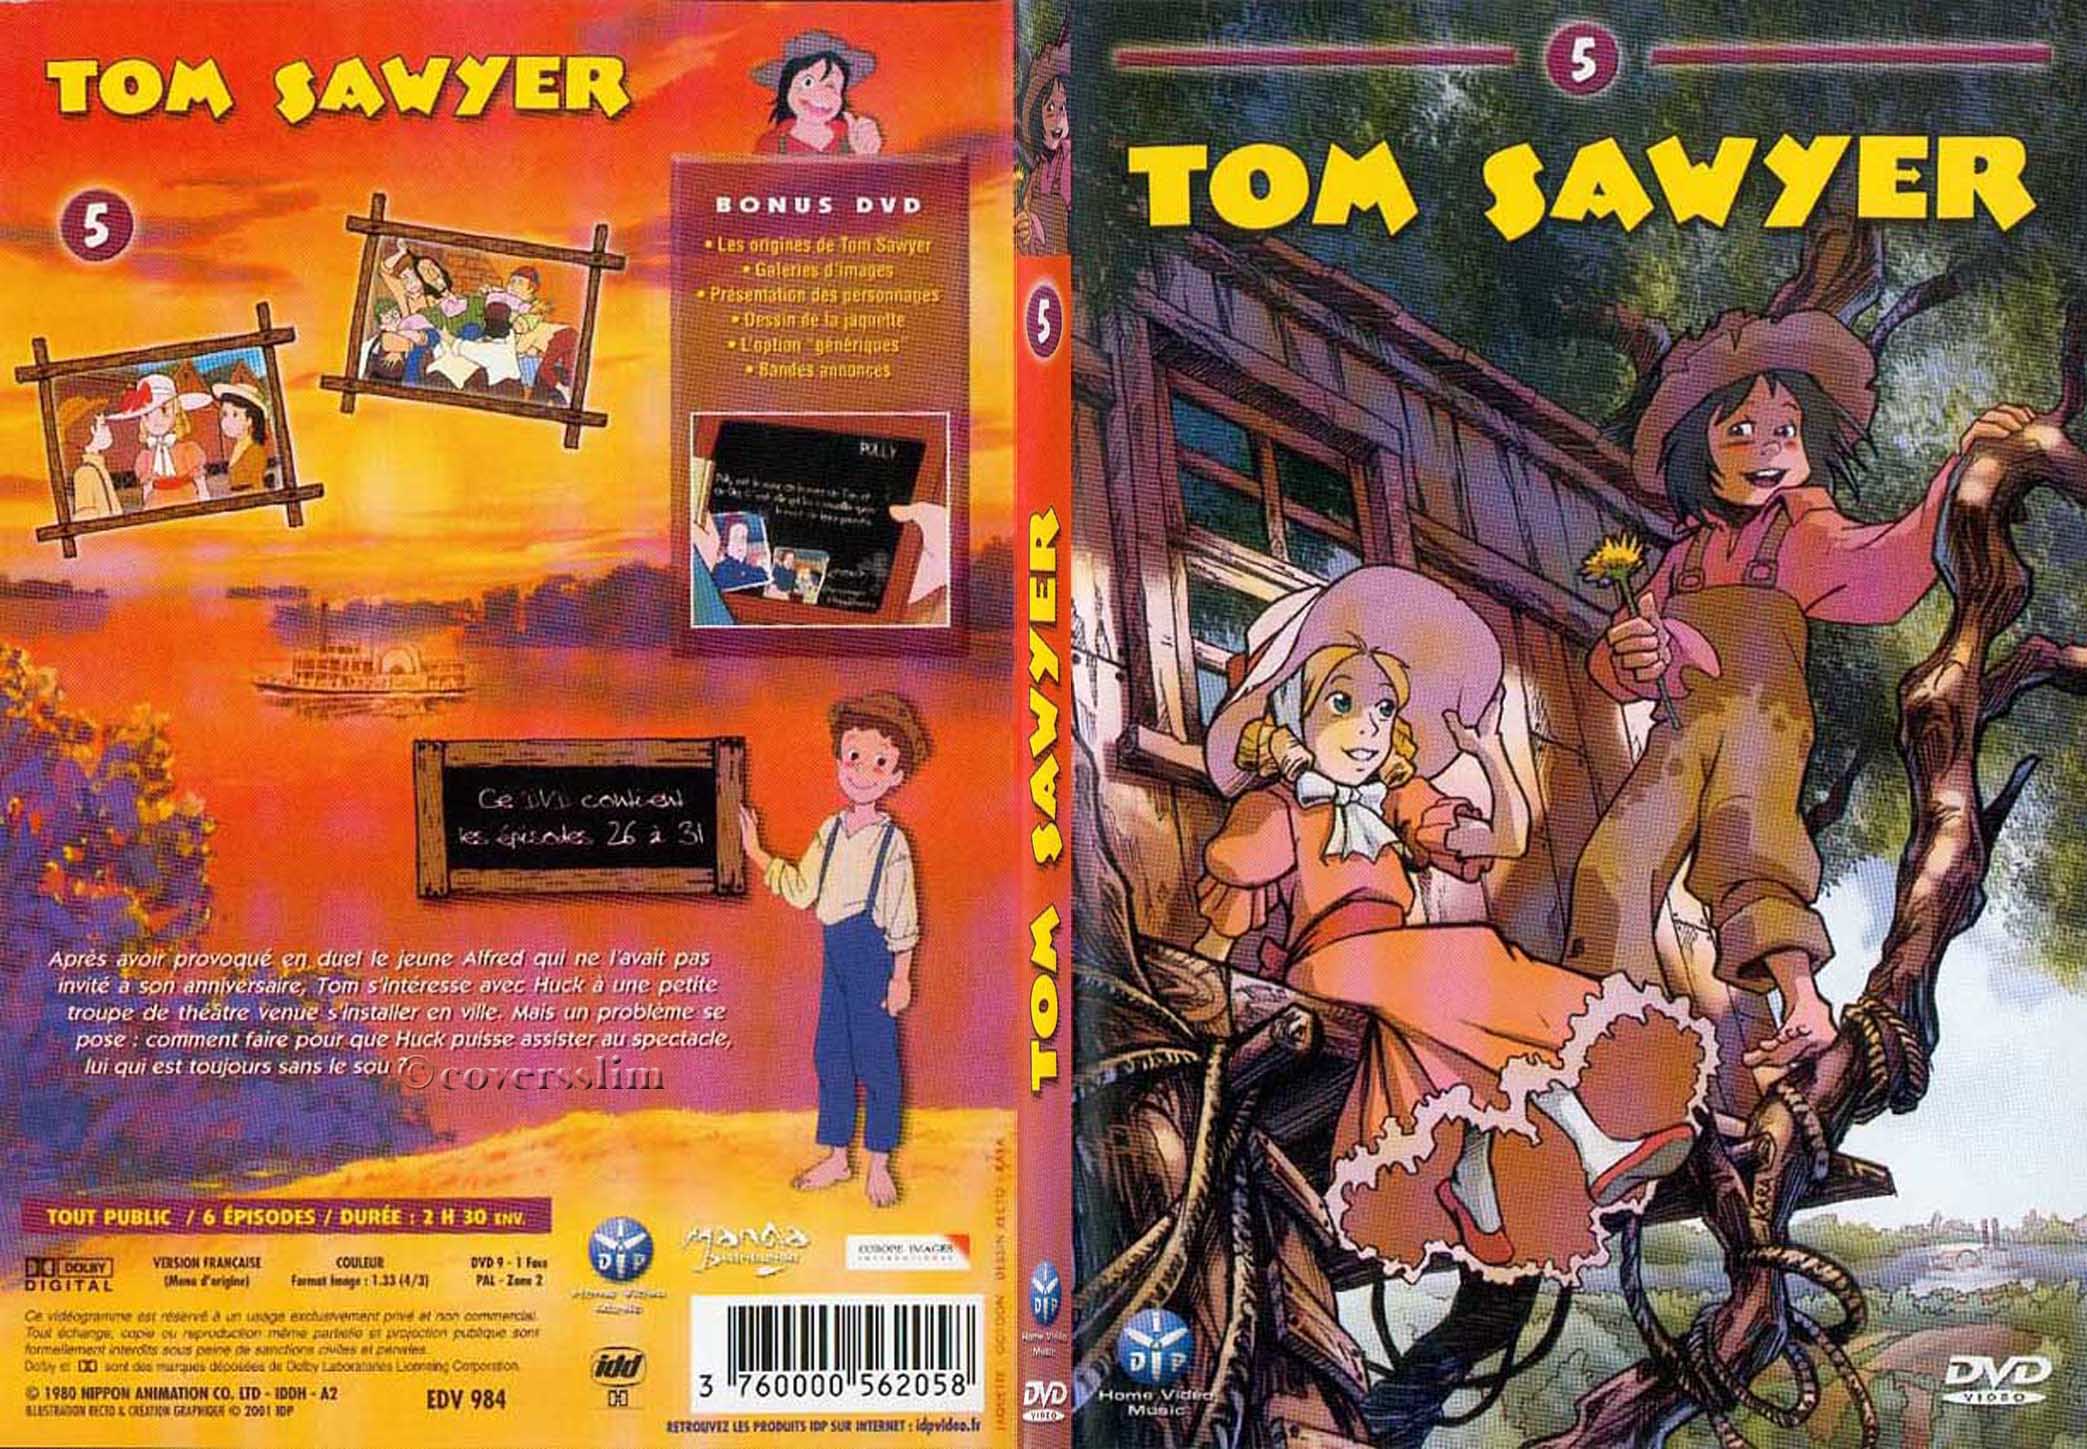 Jaquette DVD Tom Sawyer vol 5 - SLIM v2